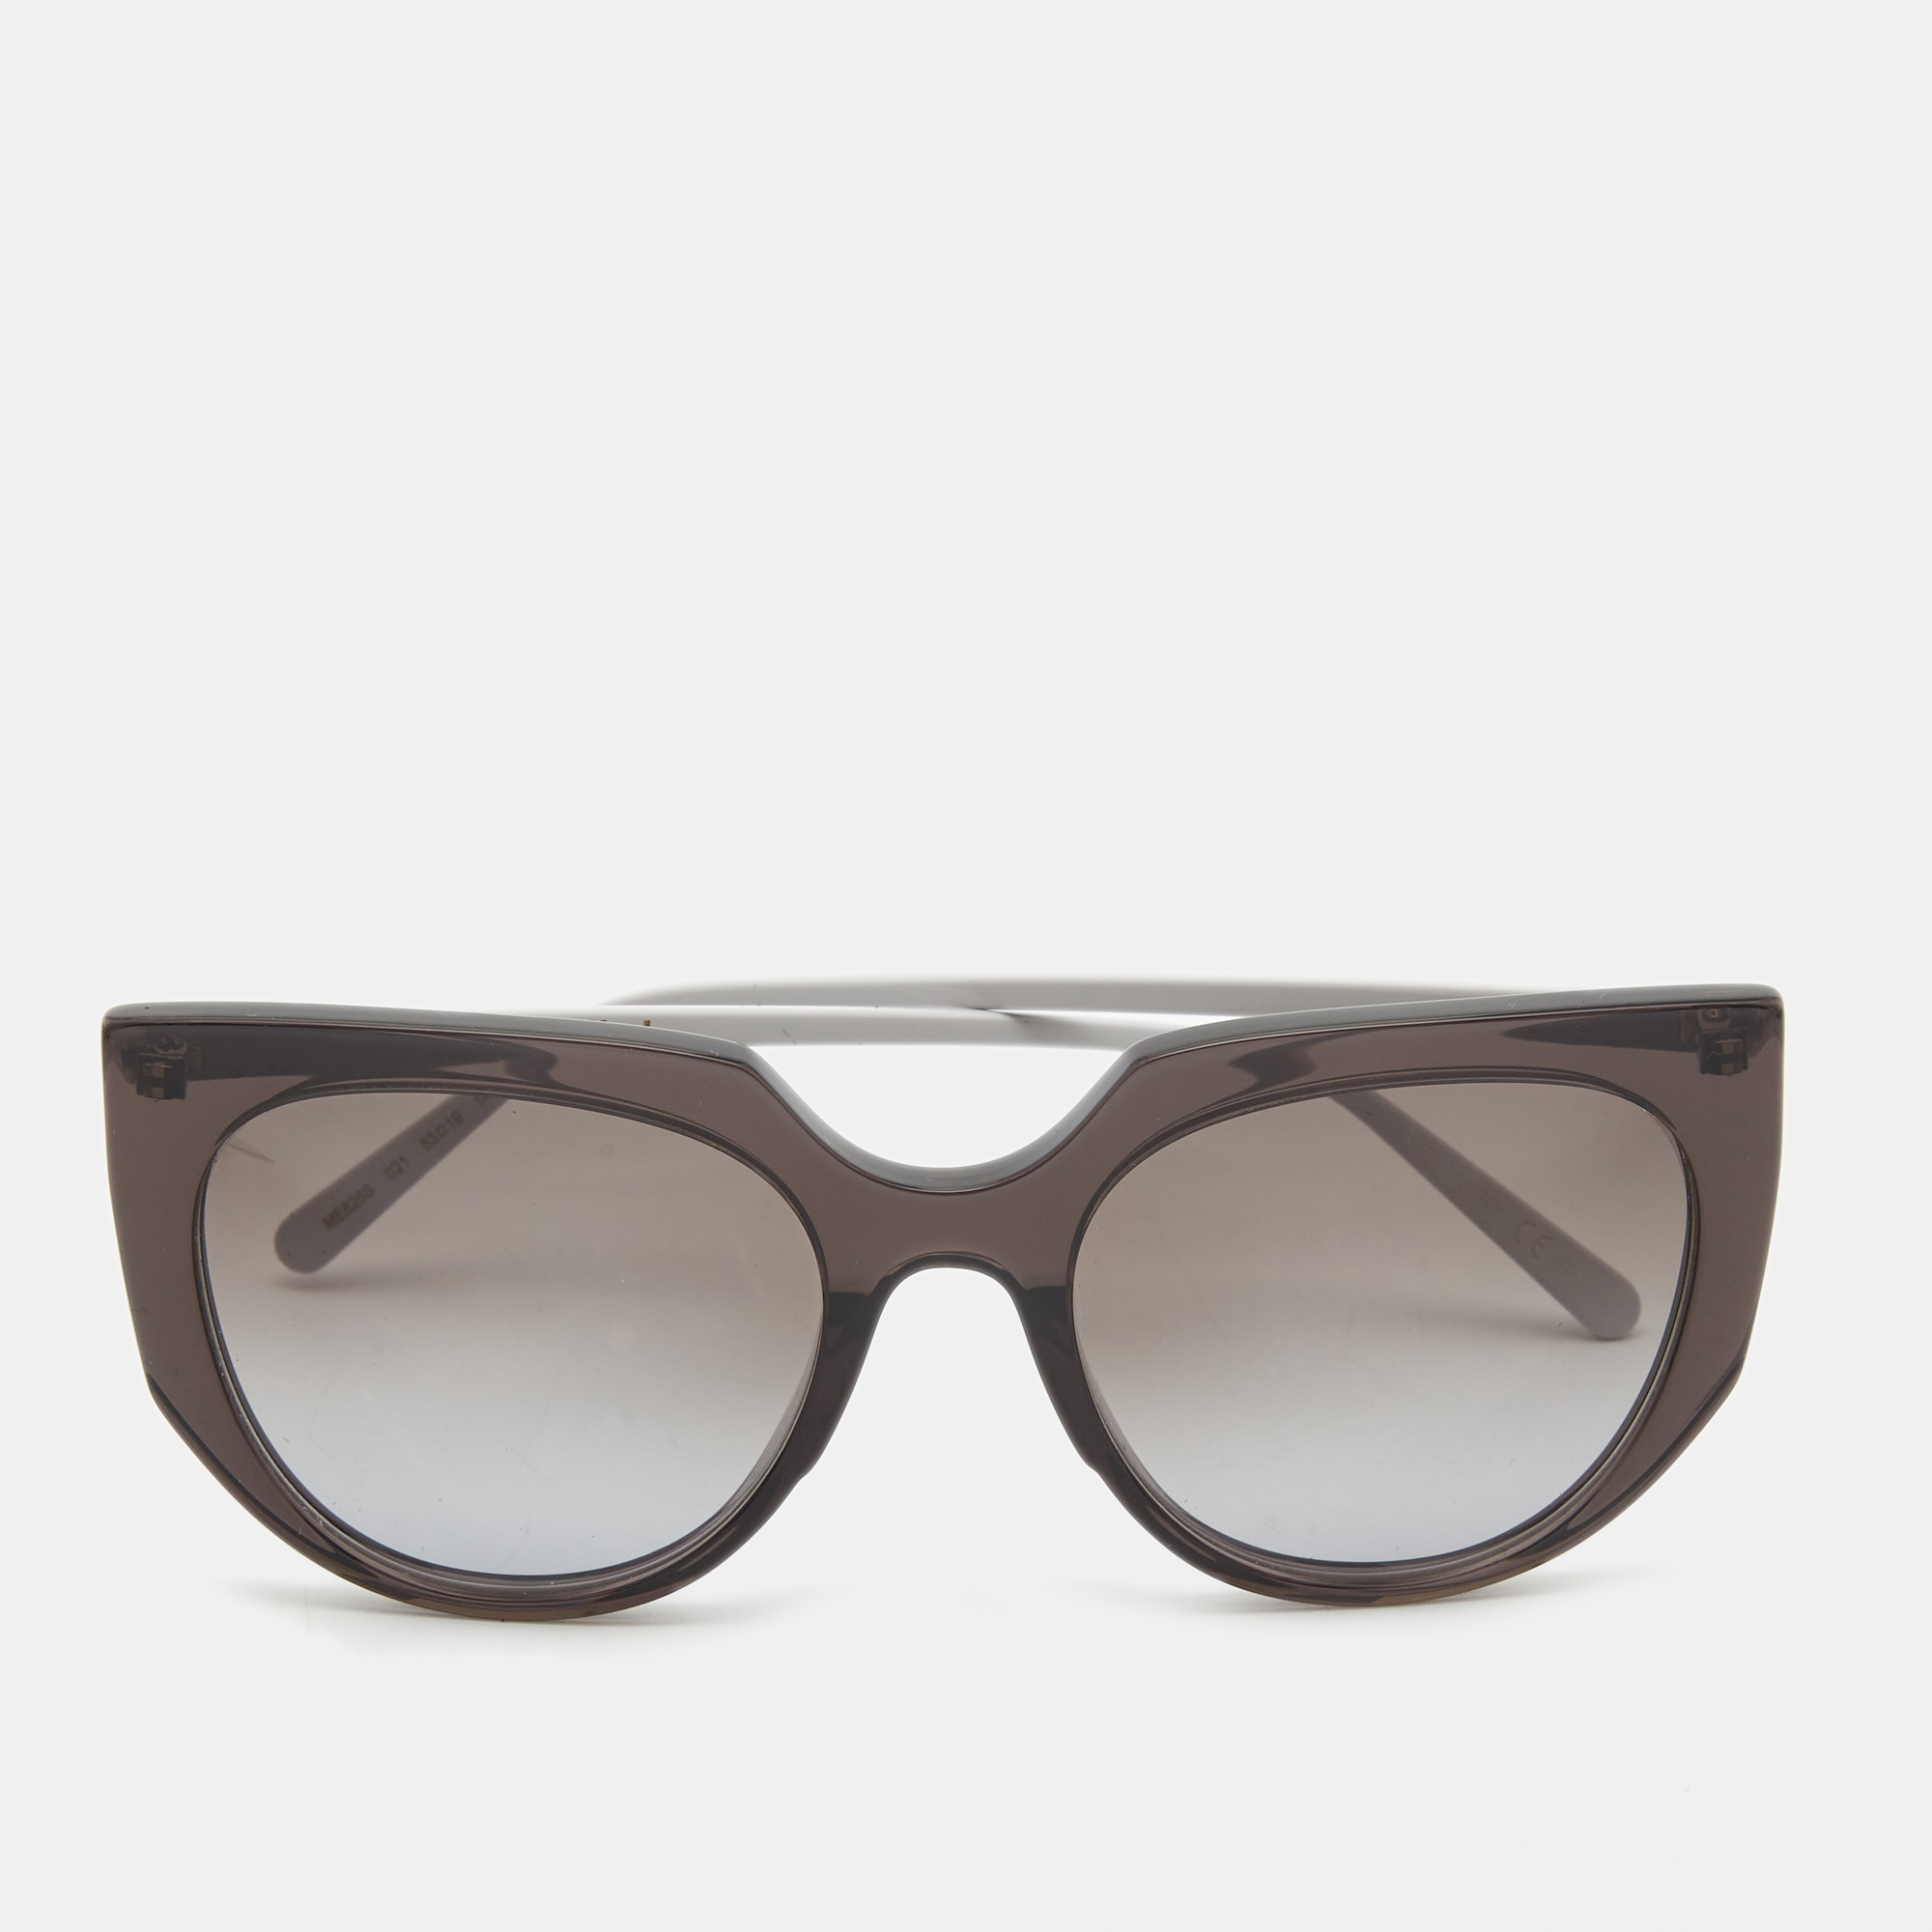 Marni grey/mauve gradient me626s cat eye sunglasses